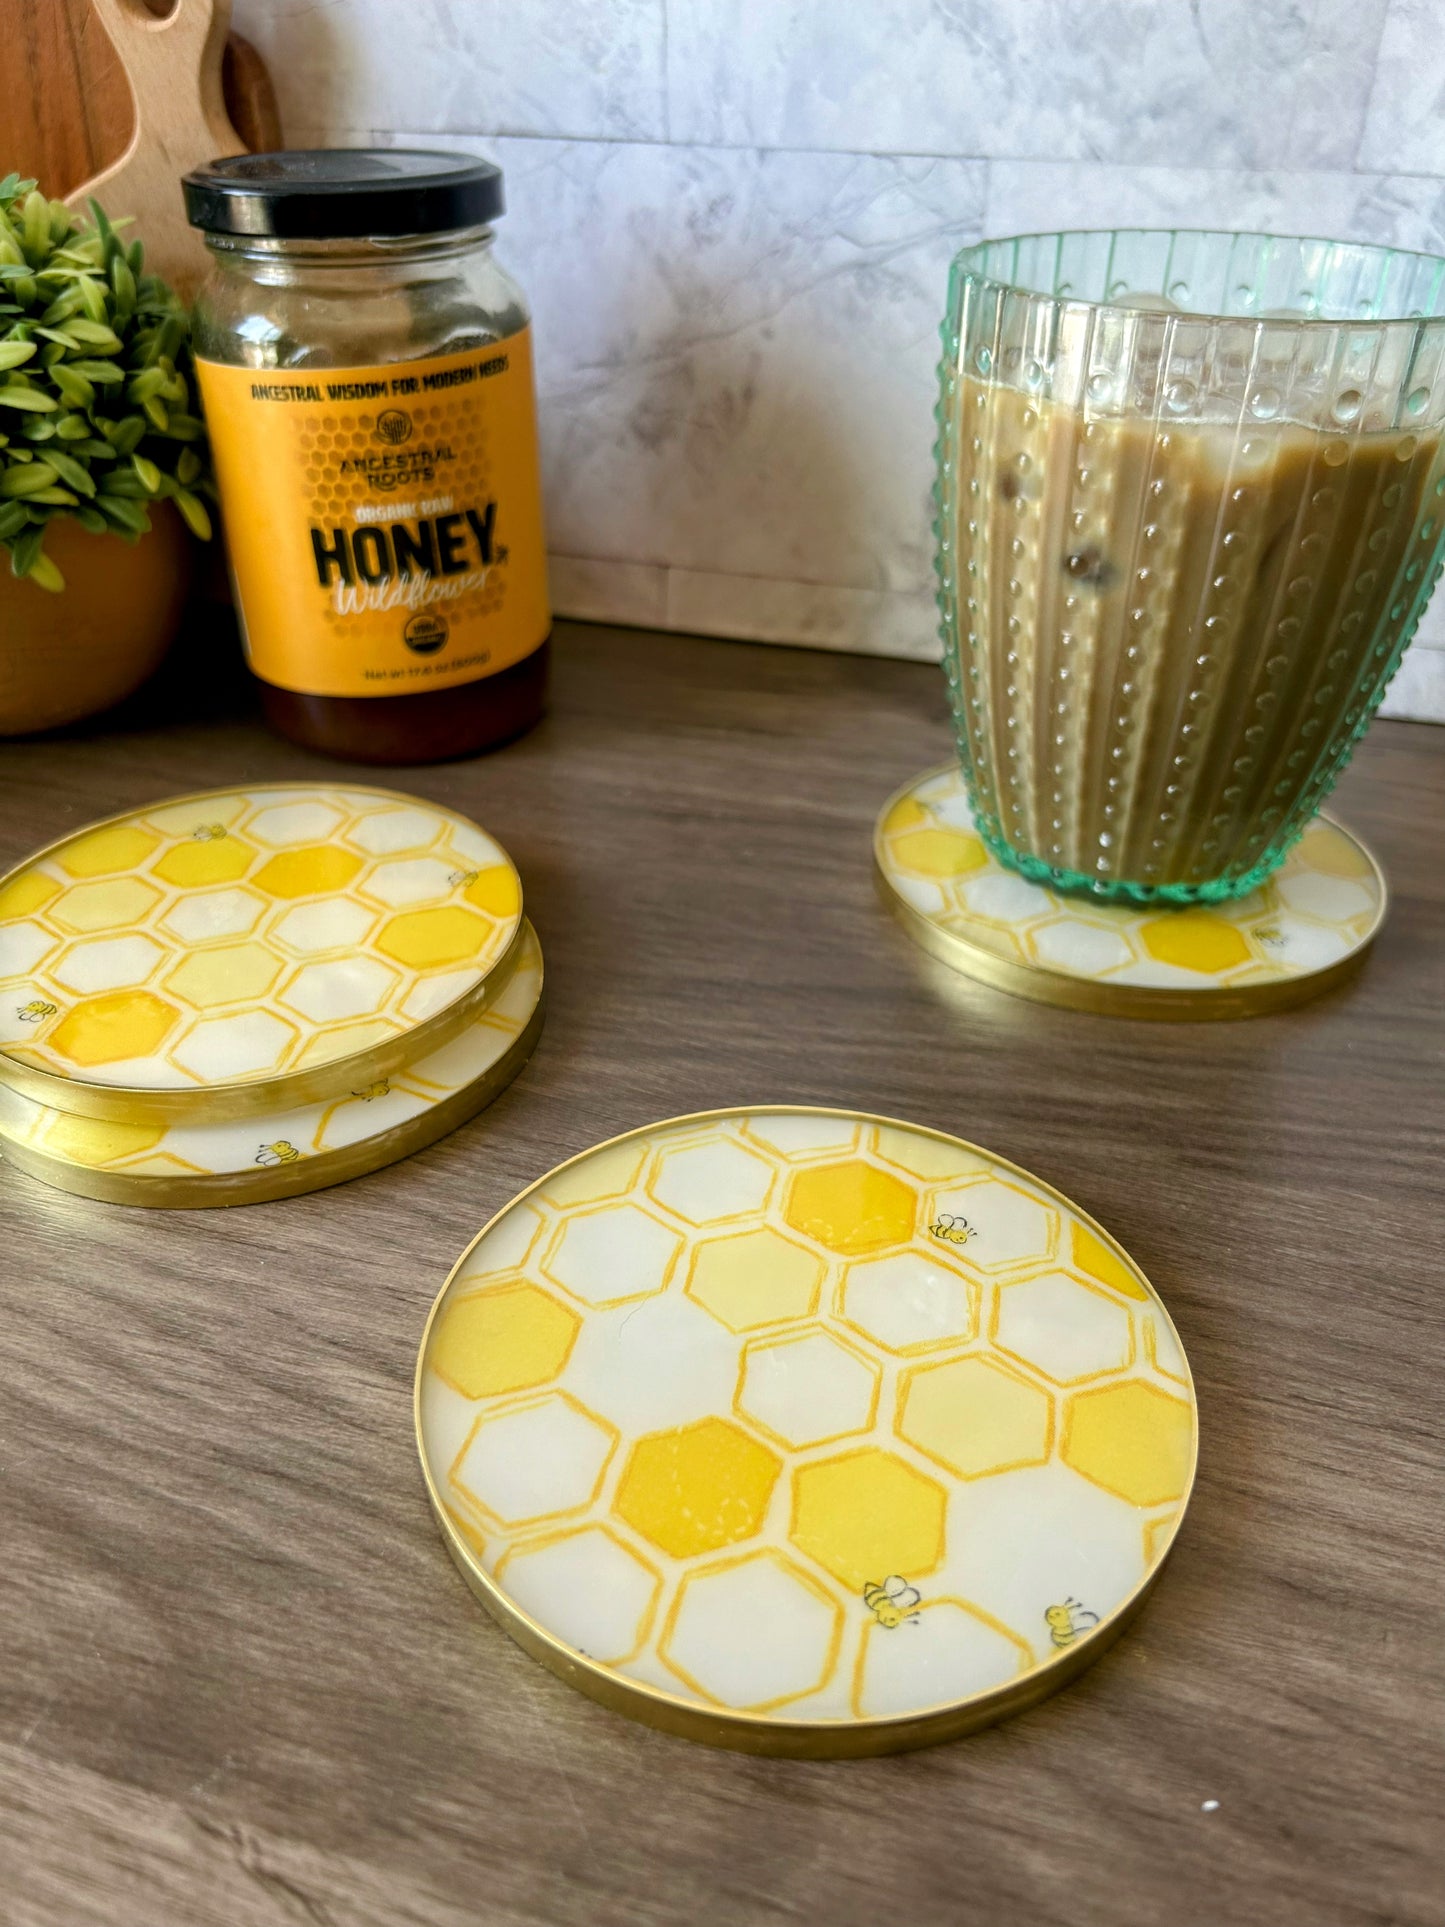 Bee and Honeycomb Coaster Set